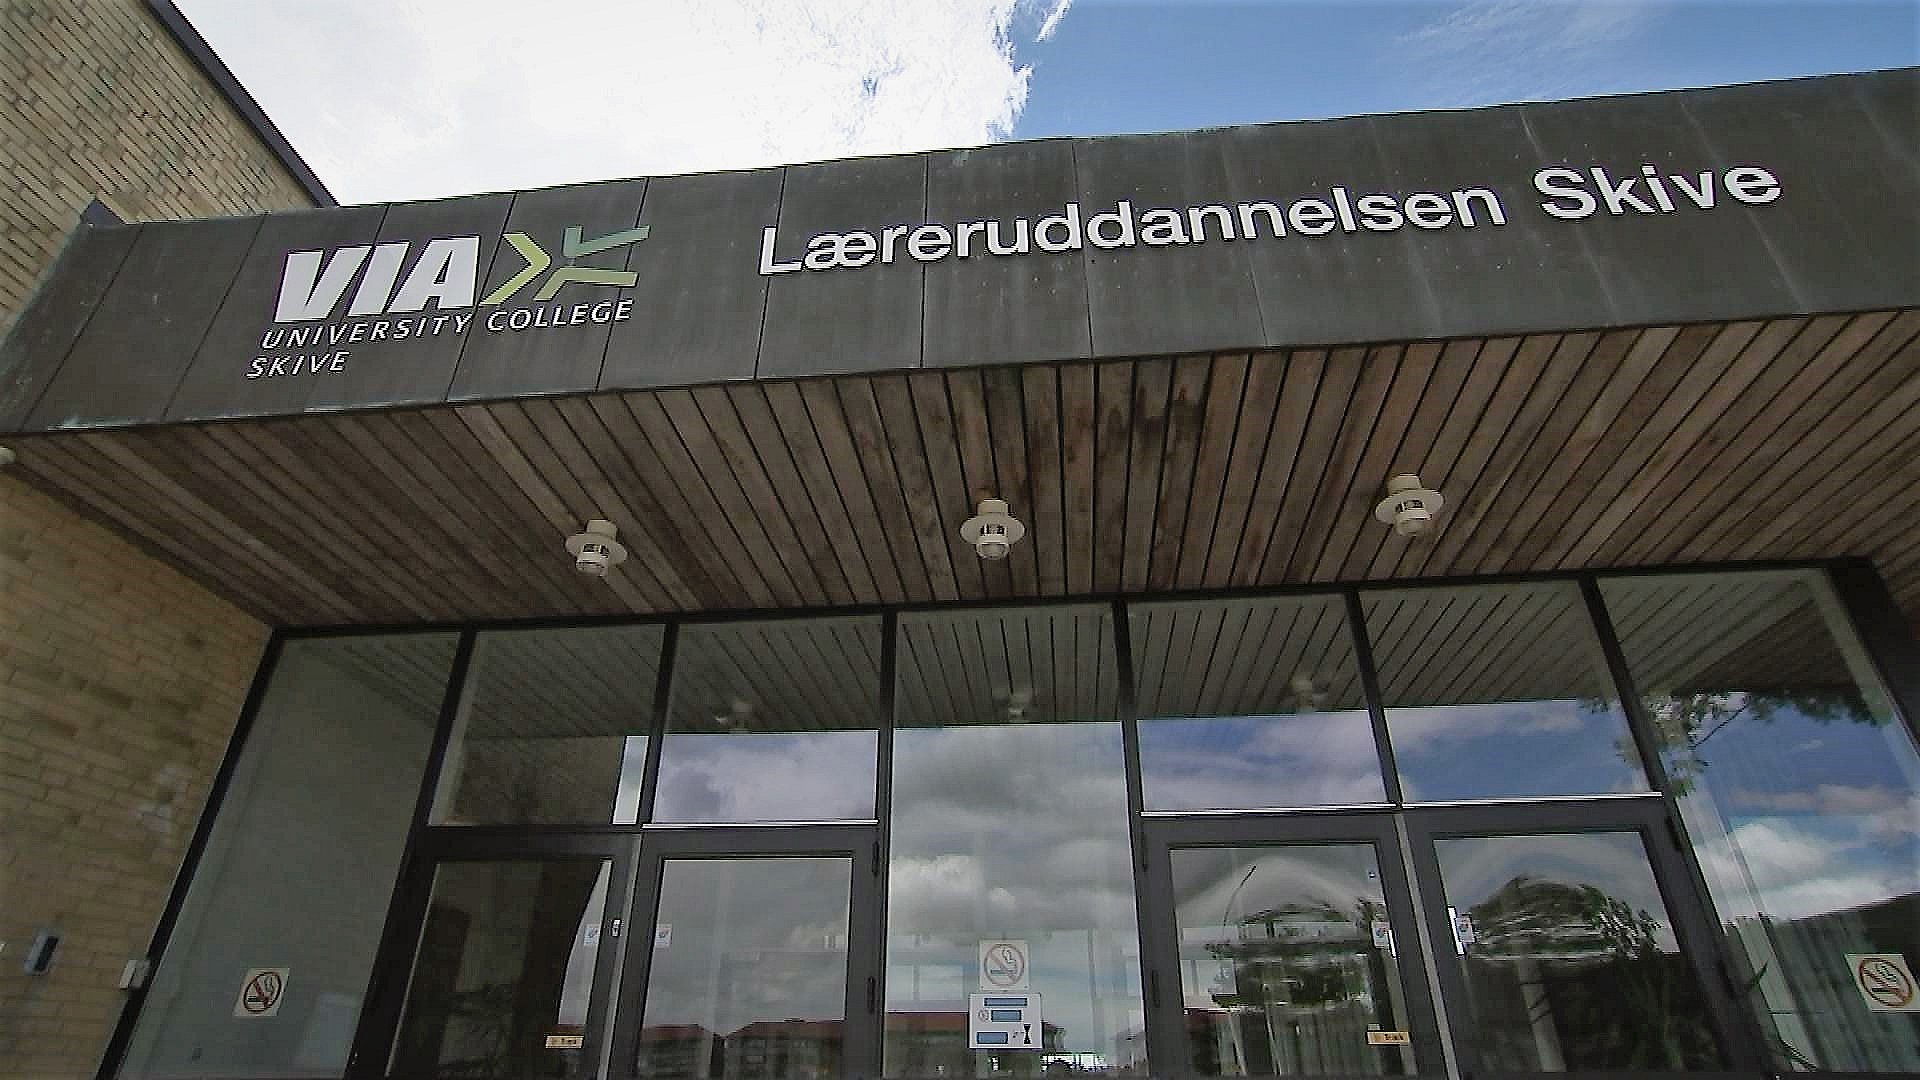 Ledige studiepladser er skævt Flest i Midtjylland | MIDTVEST